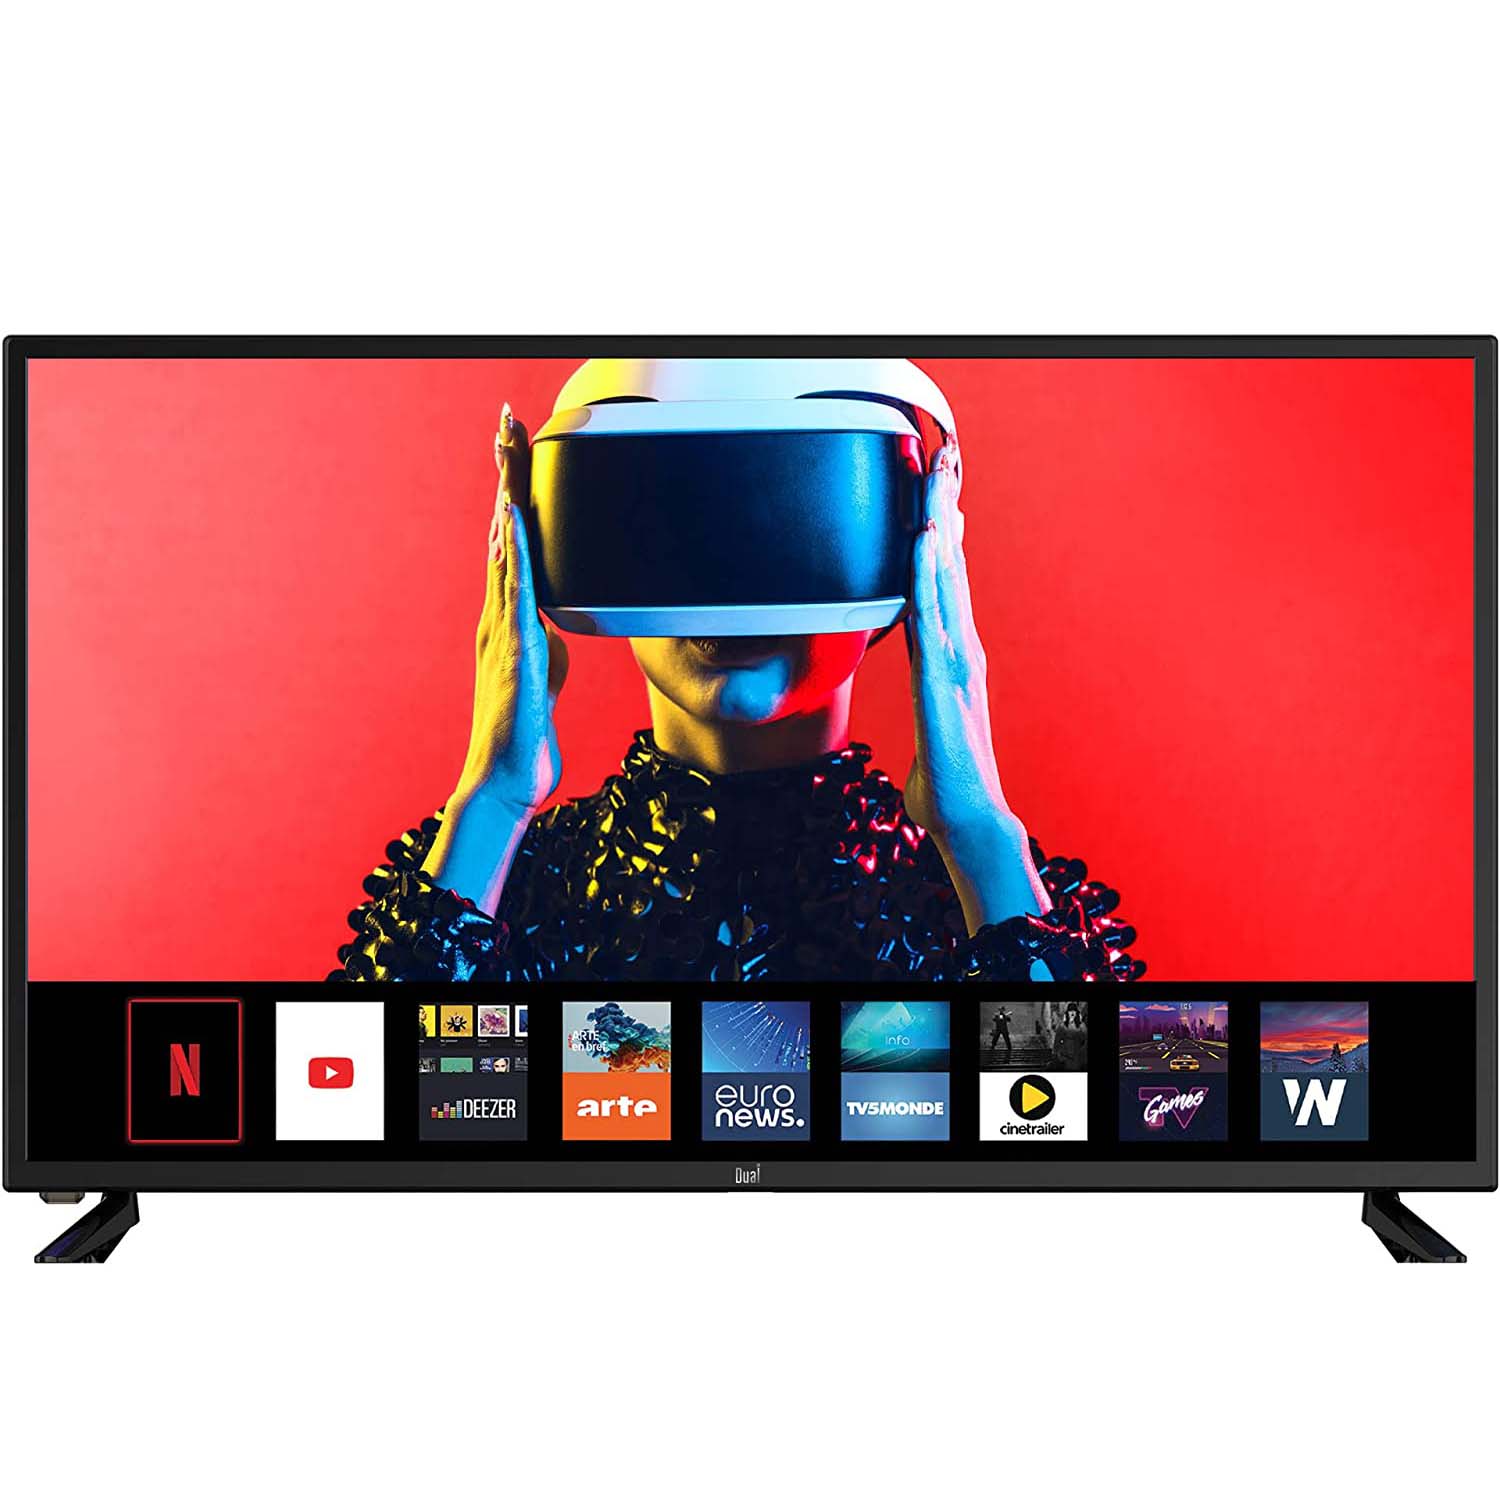 Dual Smart TV LED 39'' (100cm) HD - WiFi - Netflix - Prime Video - SCREENCAST - 2xHDMI - 2xUSB PVR Ready